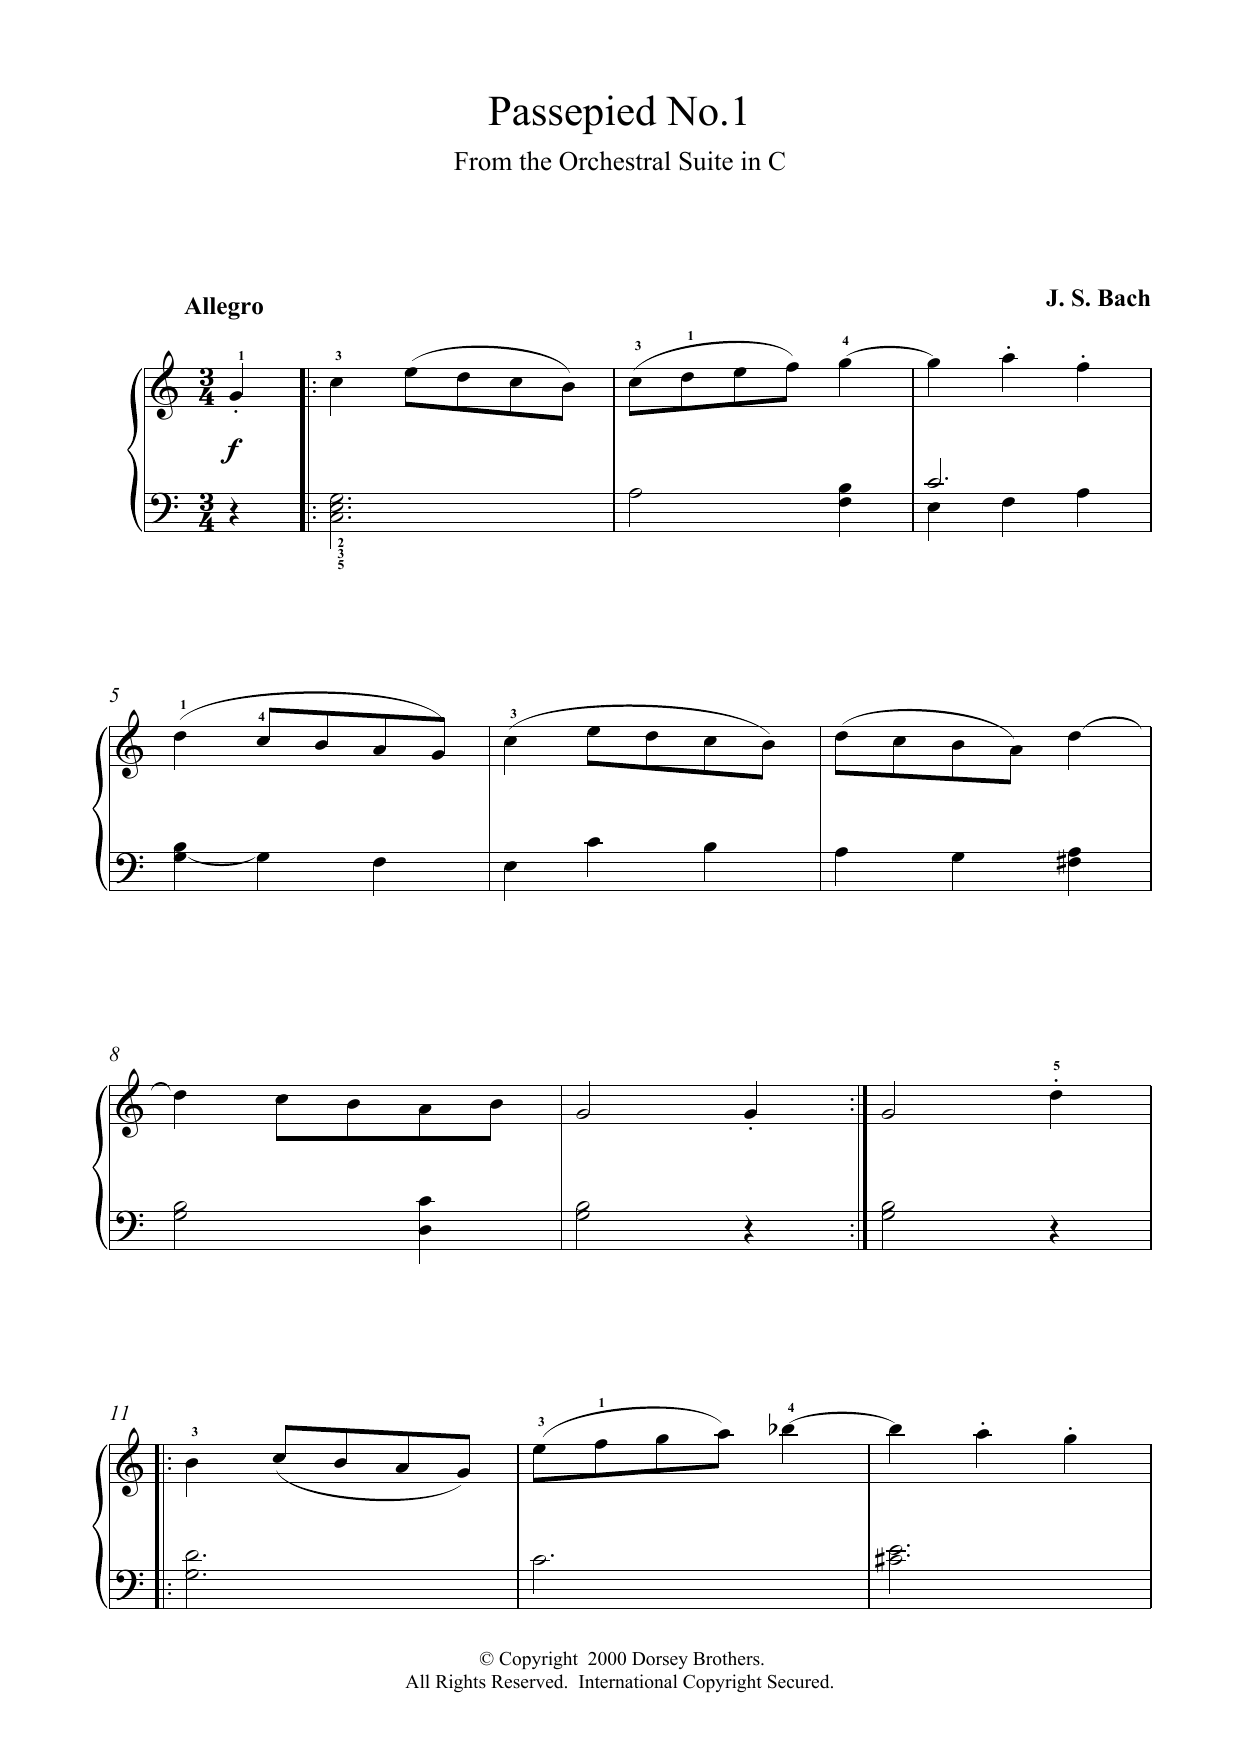 Johann Sebastian Bach Passepied No.1 Sheet Music Notes & Chords for Clarinet - Download or Print PDF